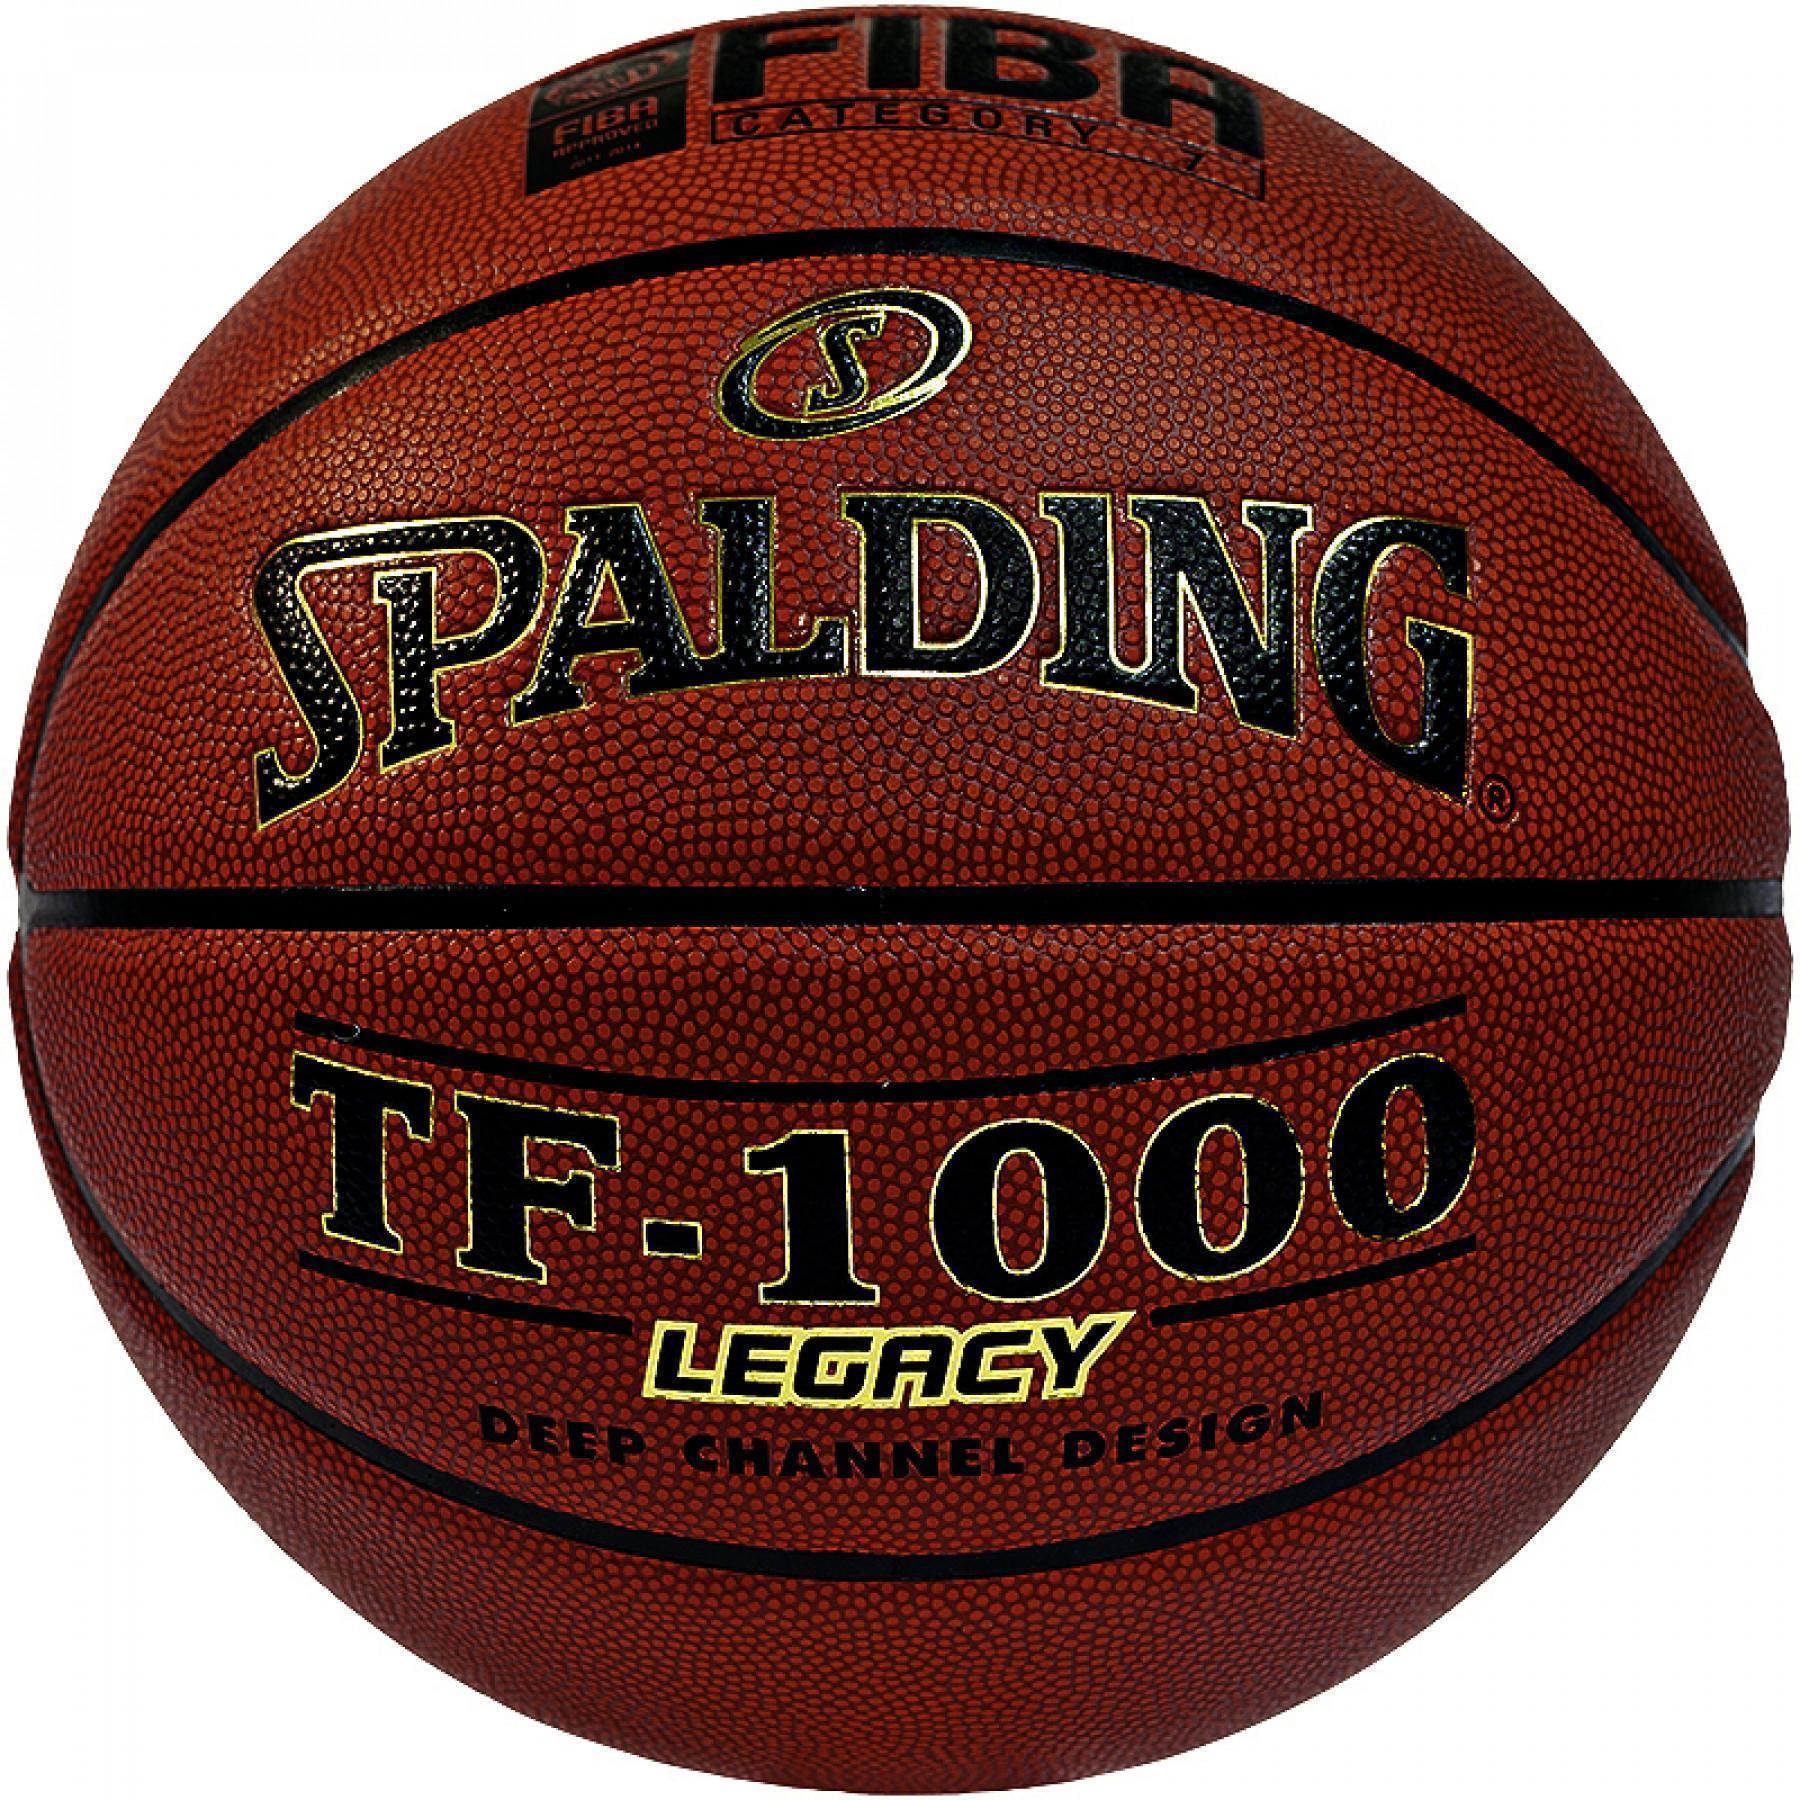 Balloon Spalding TF1000 Legacy FIBA